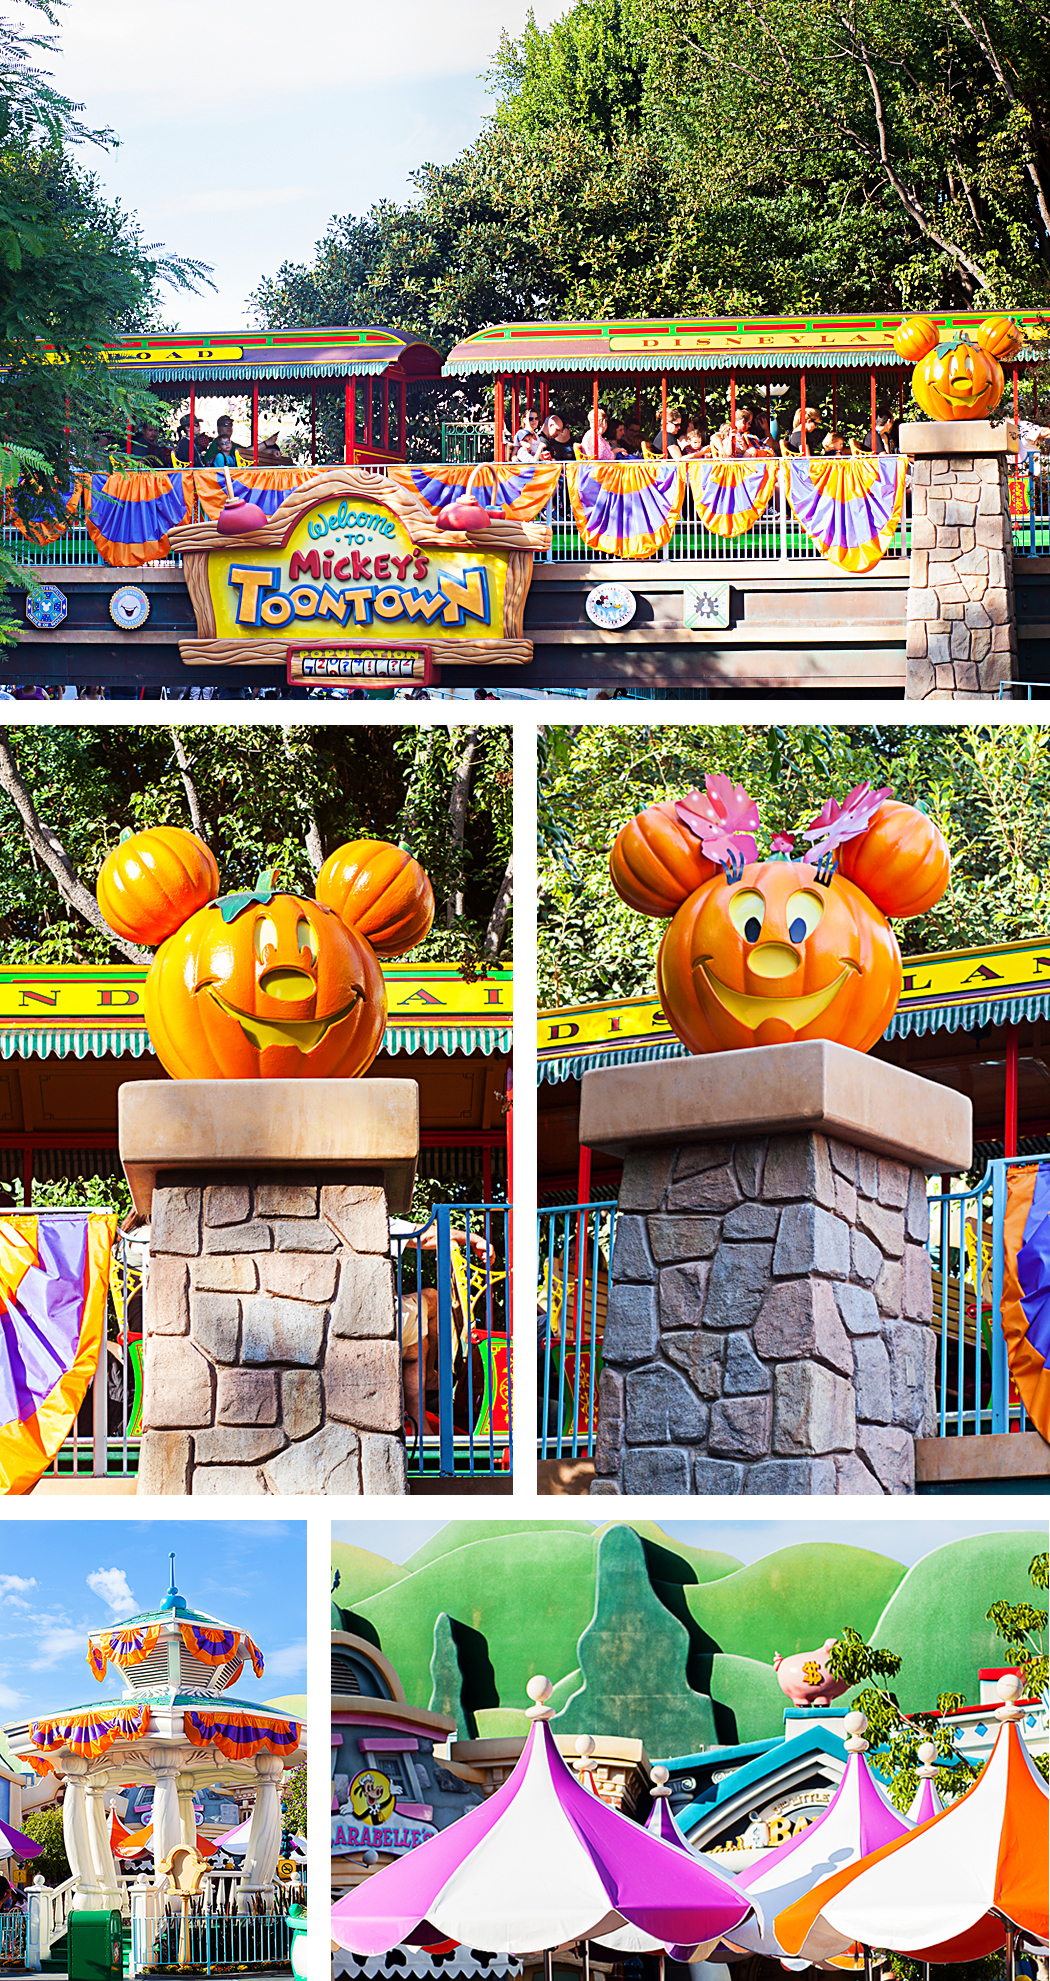 Disneyland Halloween Time